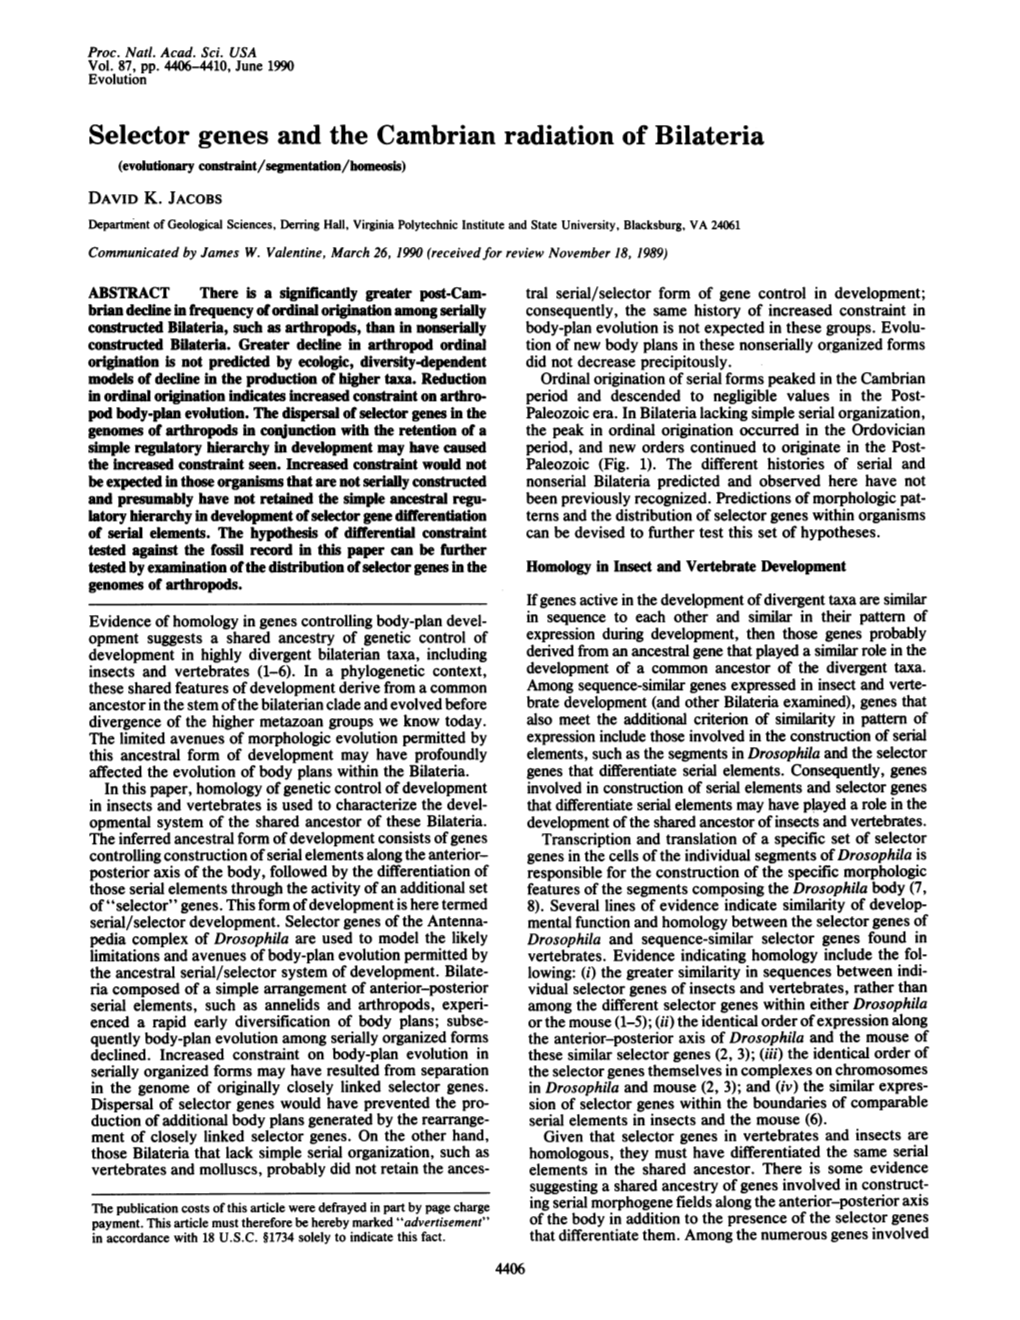 Selector Genes and the Cambrian Radiation of Bilateria (Evolutionary Constraint/Seginentation/Homeosis) DAVID K